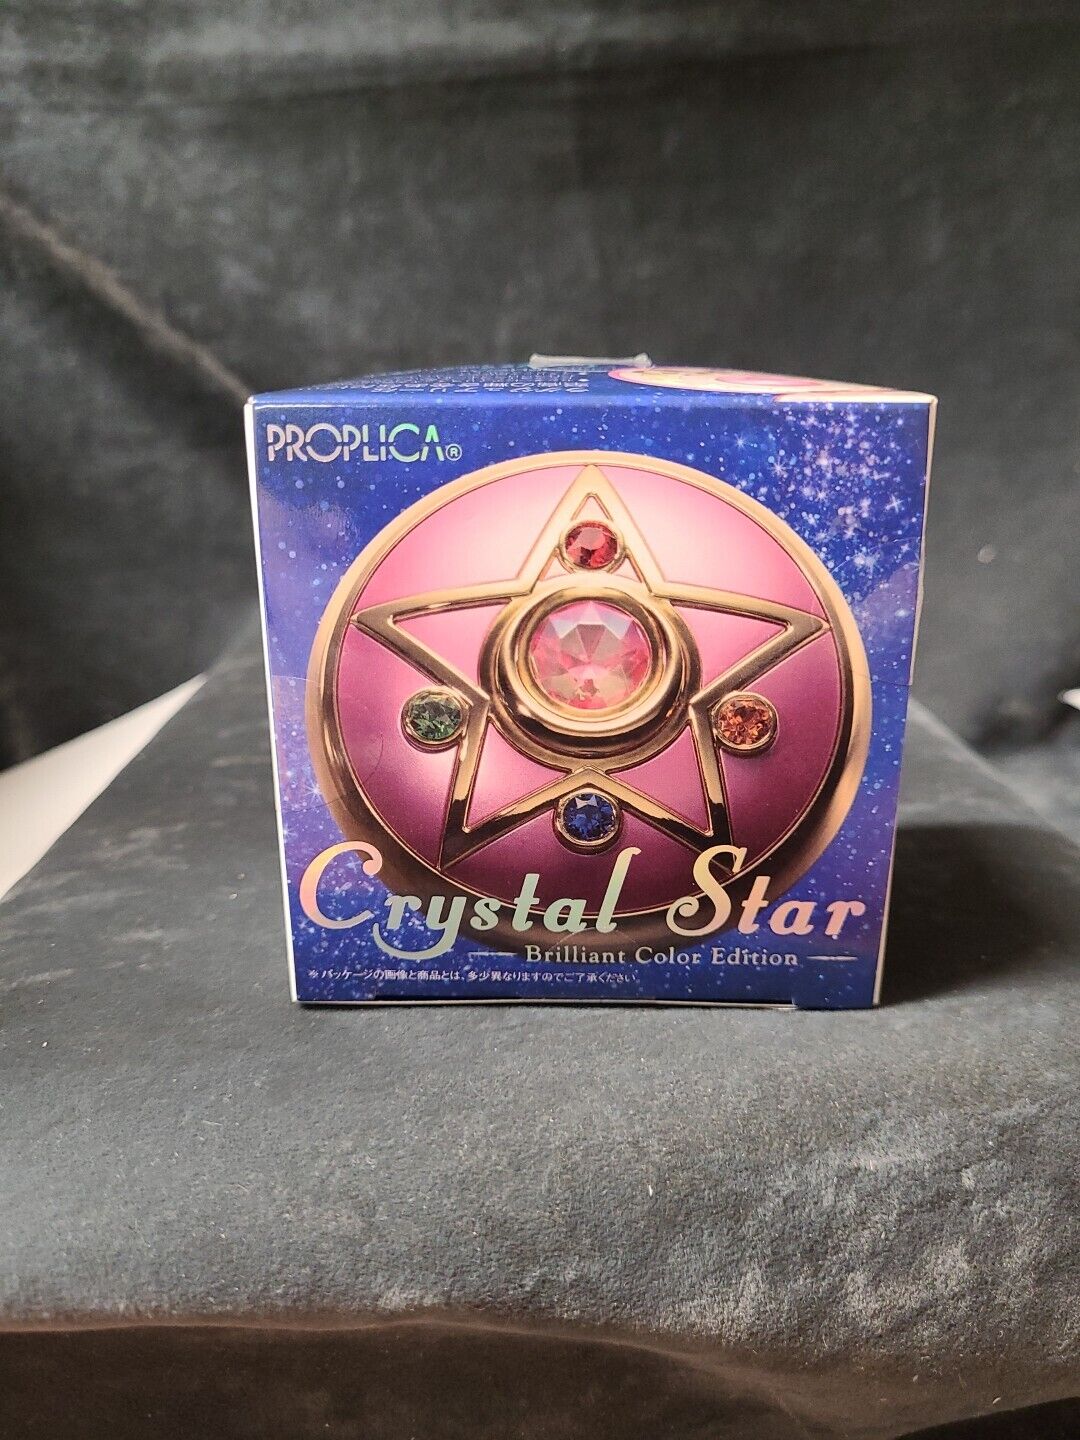 Bandai Proplica Sailor Moon: Crystal Star Brilliant Color Edition